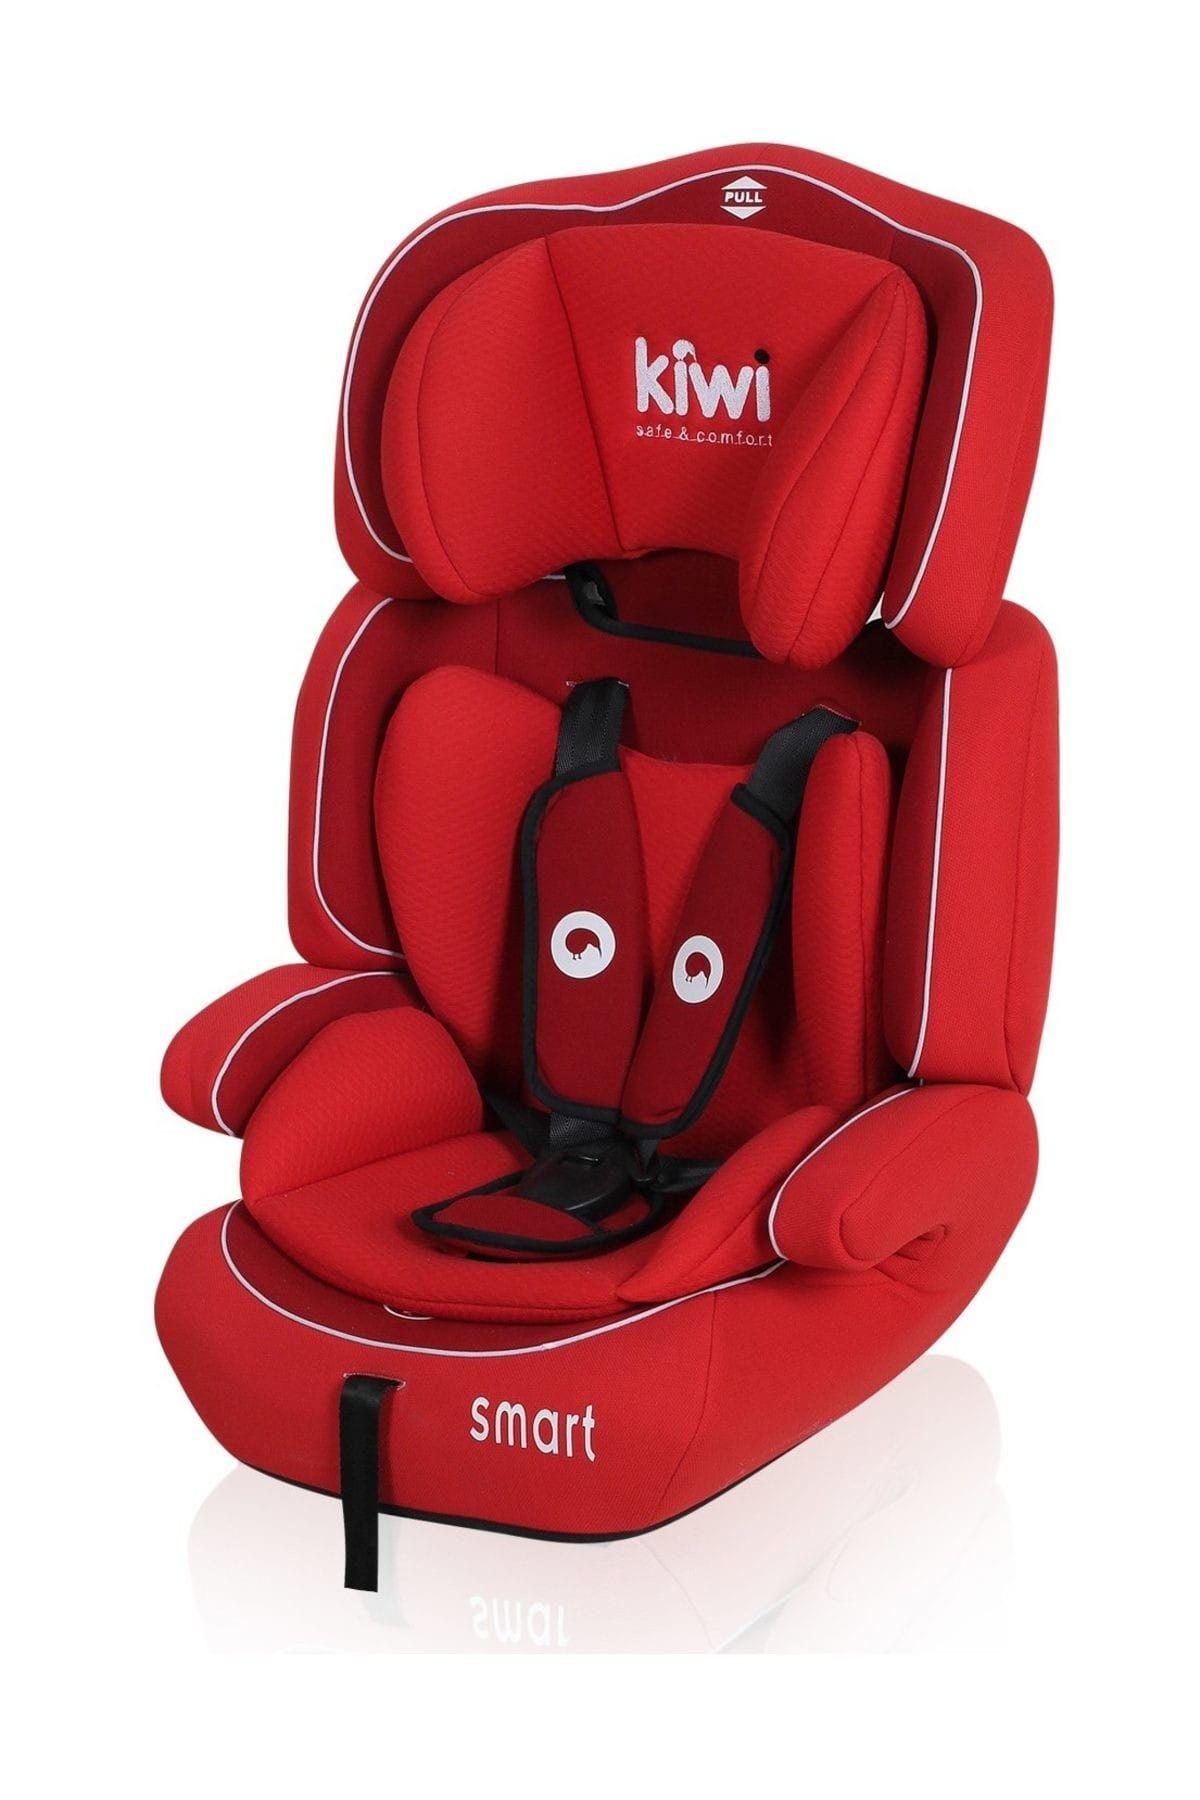 Kiwi Safe&Comfort Smart 9-36 Kg Oto Koltuğu Kırmızı